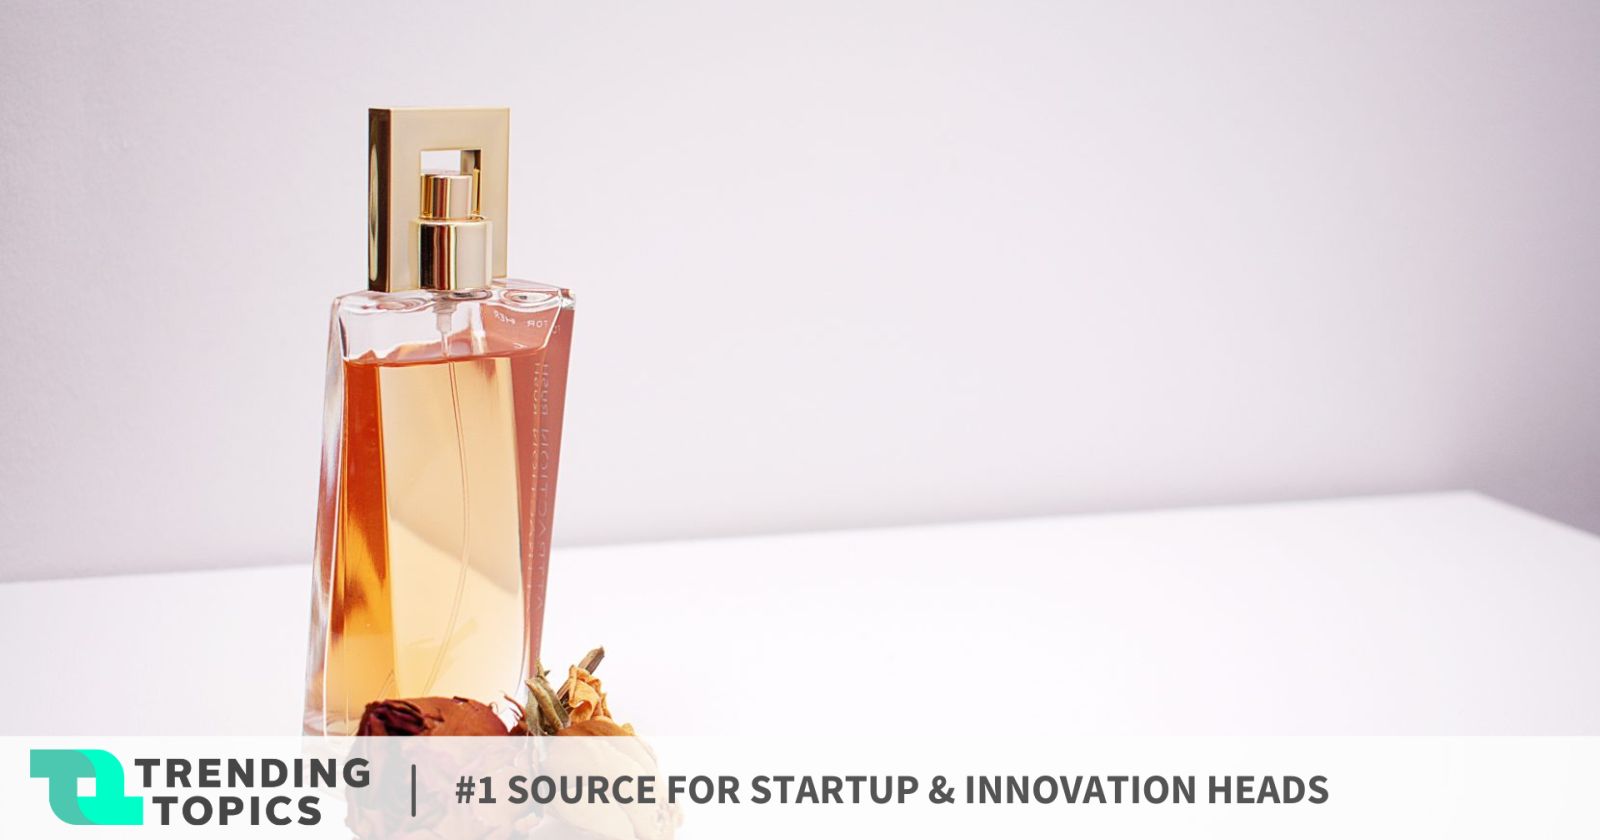 AIR Eau de Parfum: Sustainable Fragrance made from CO2